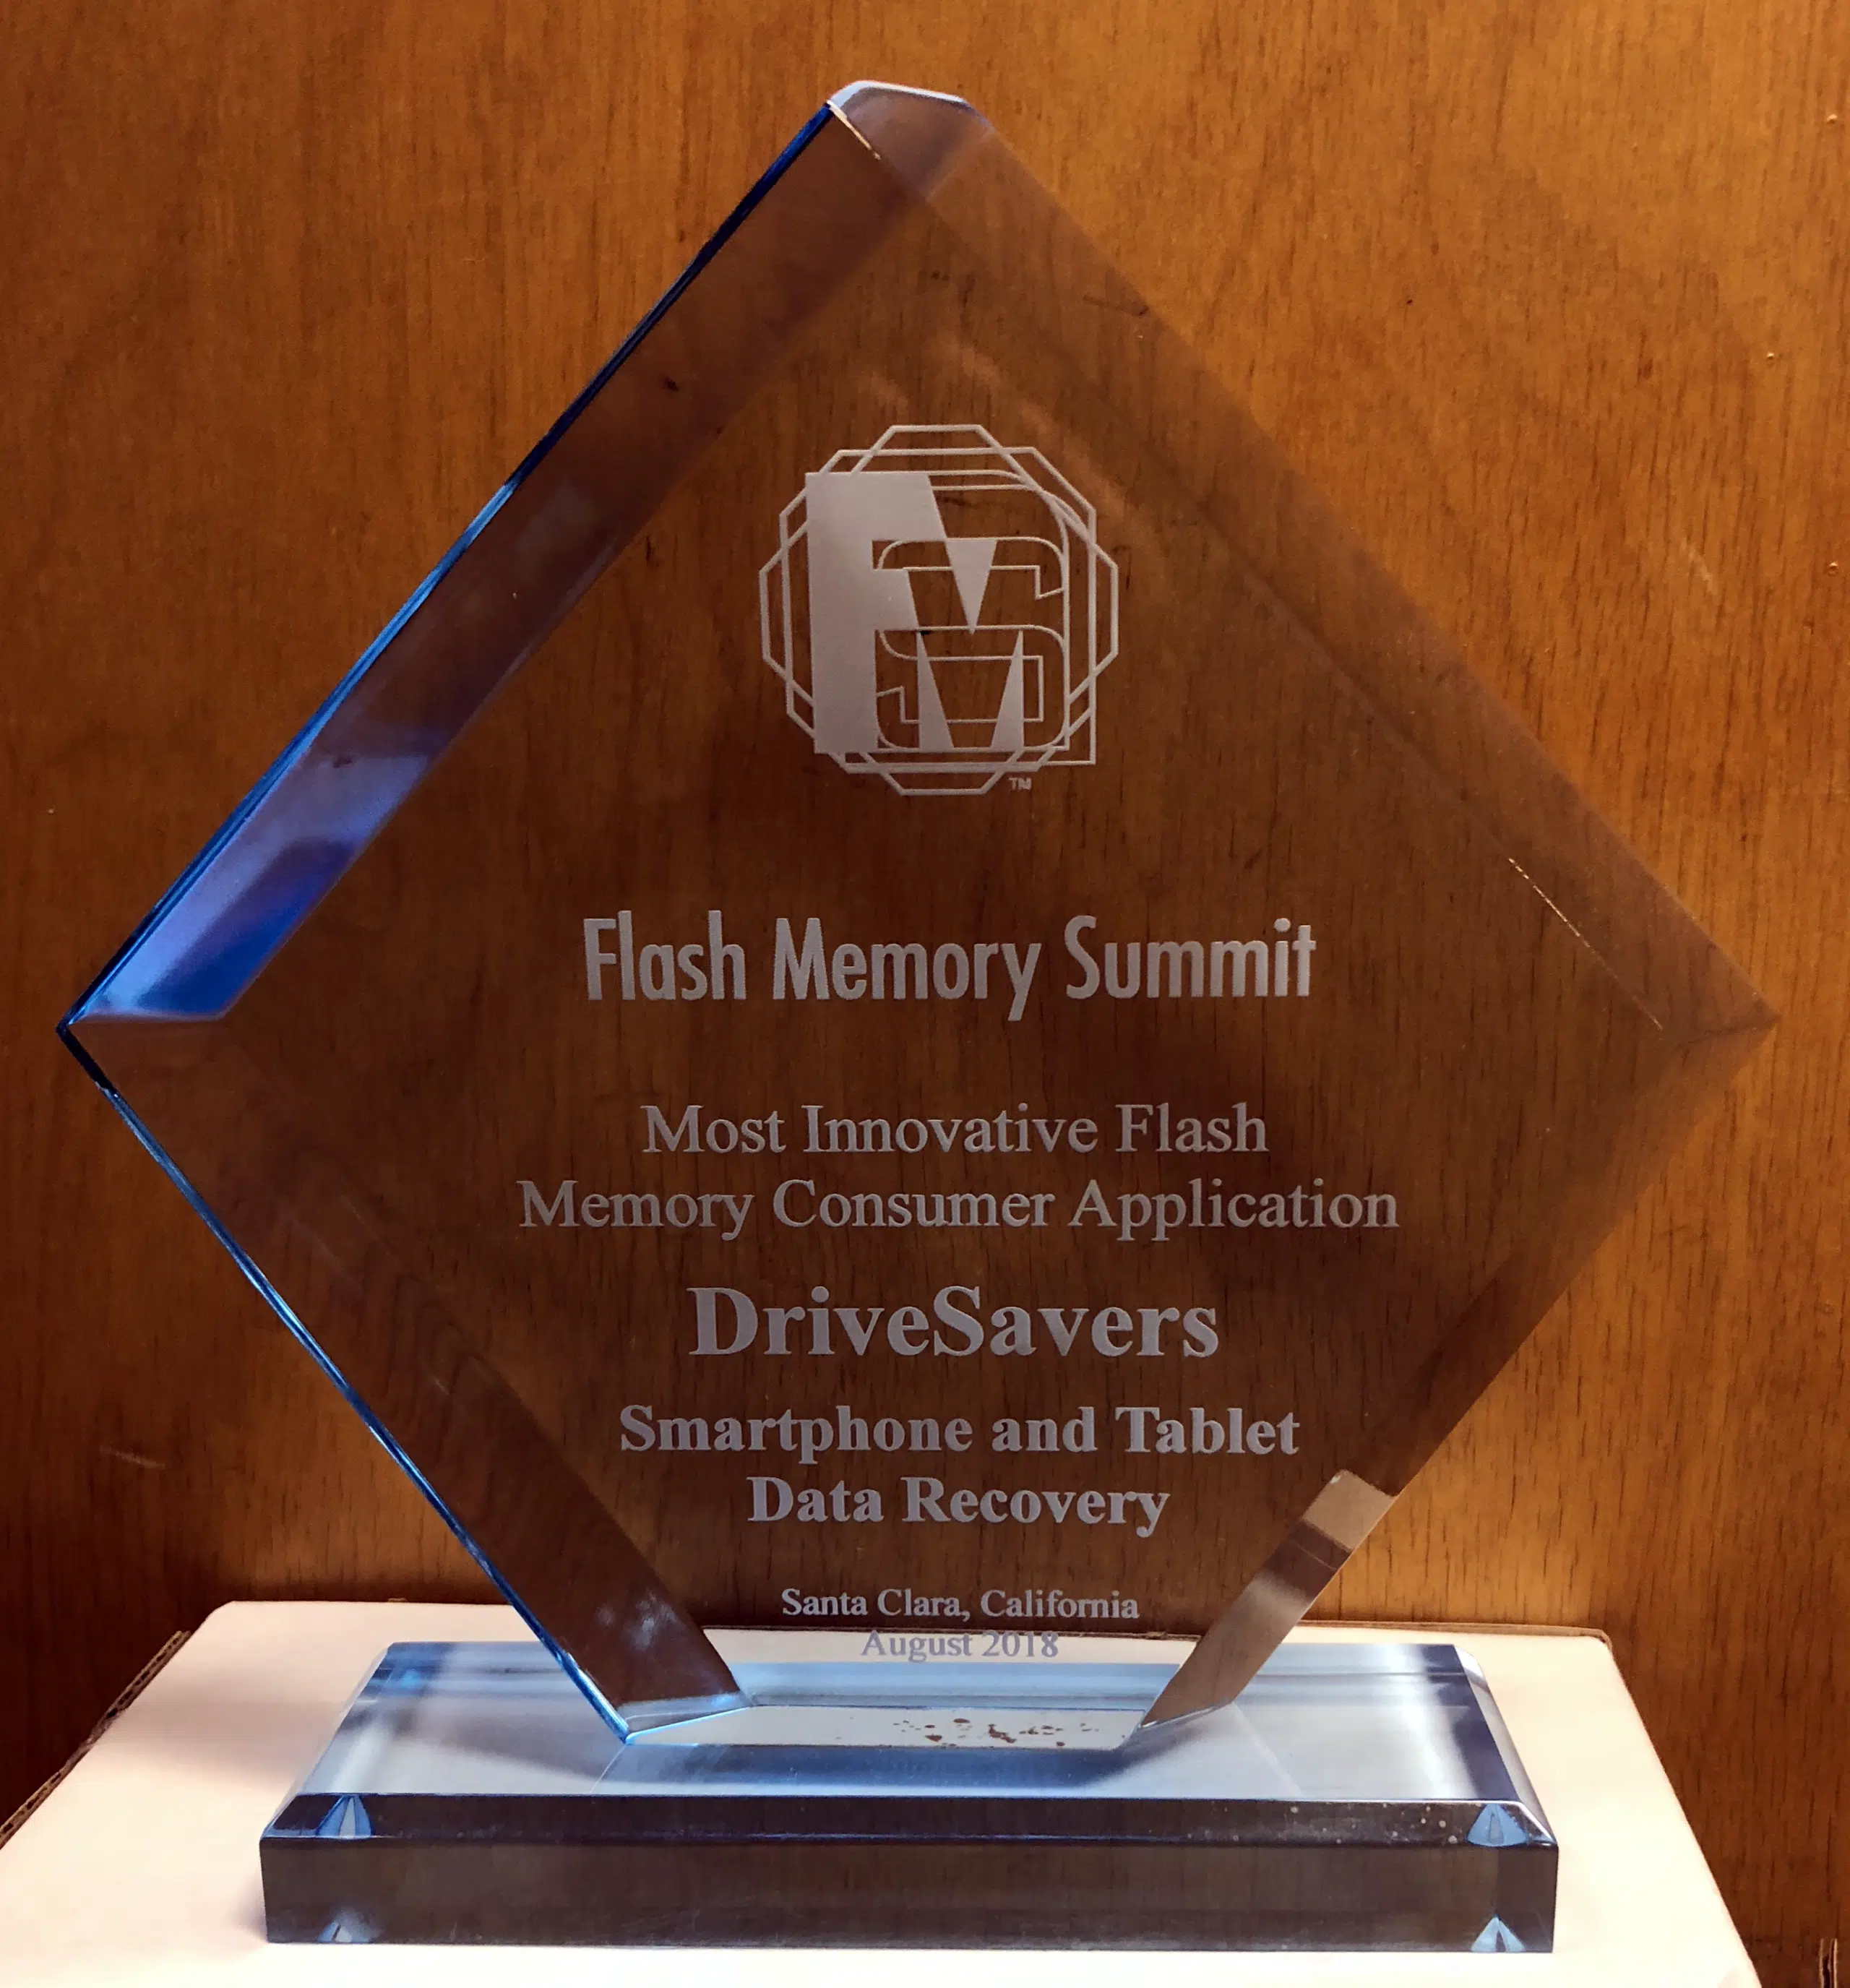 DriveSavers Wins 2018 Most Innovative Flash Memory Consumer Application Award